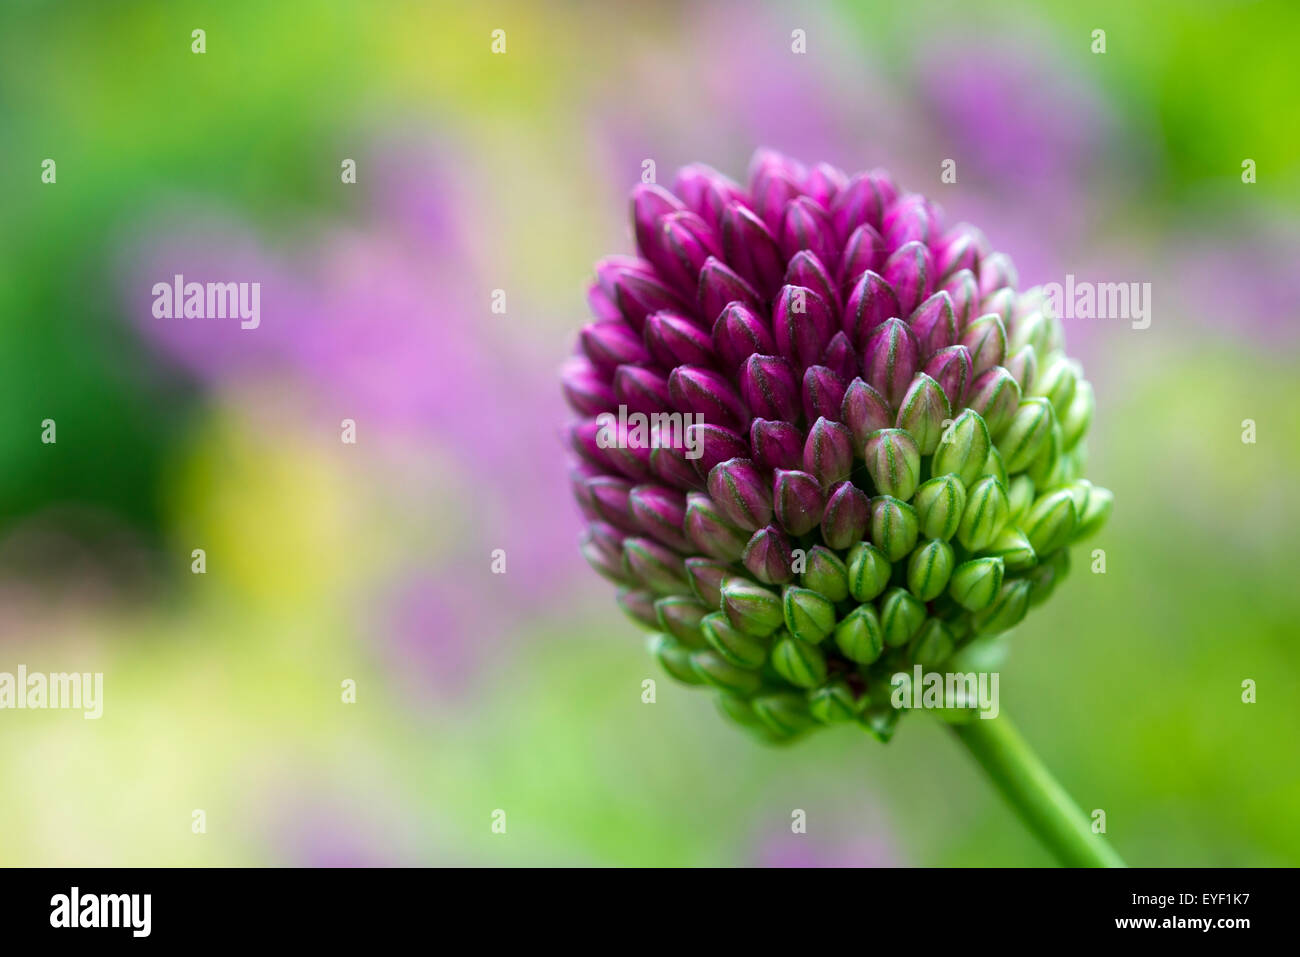 Close up an allium sphaerocephalum flower head with colourful background blur. Stock Photo